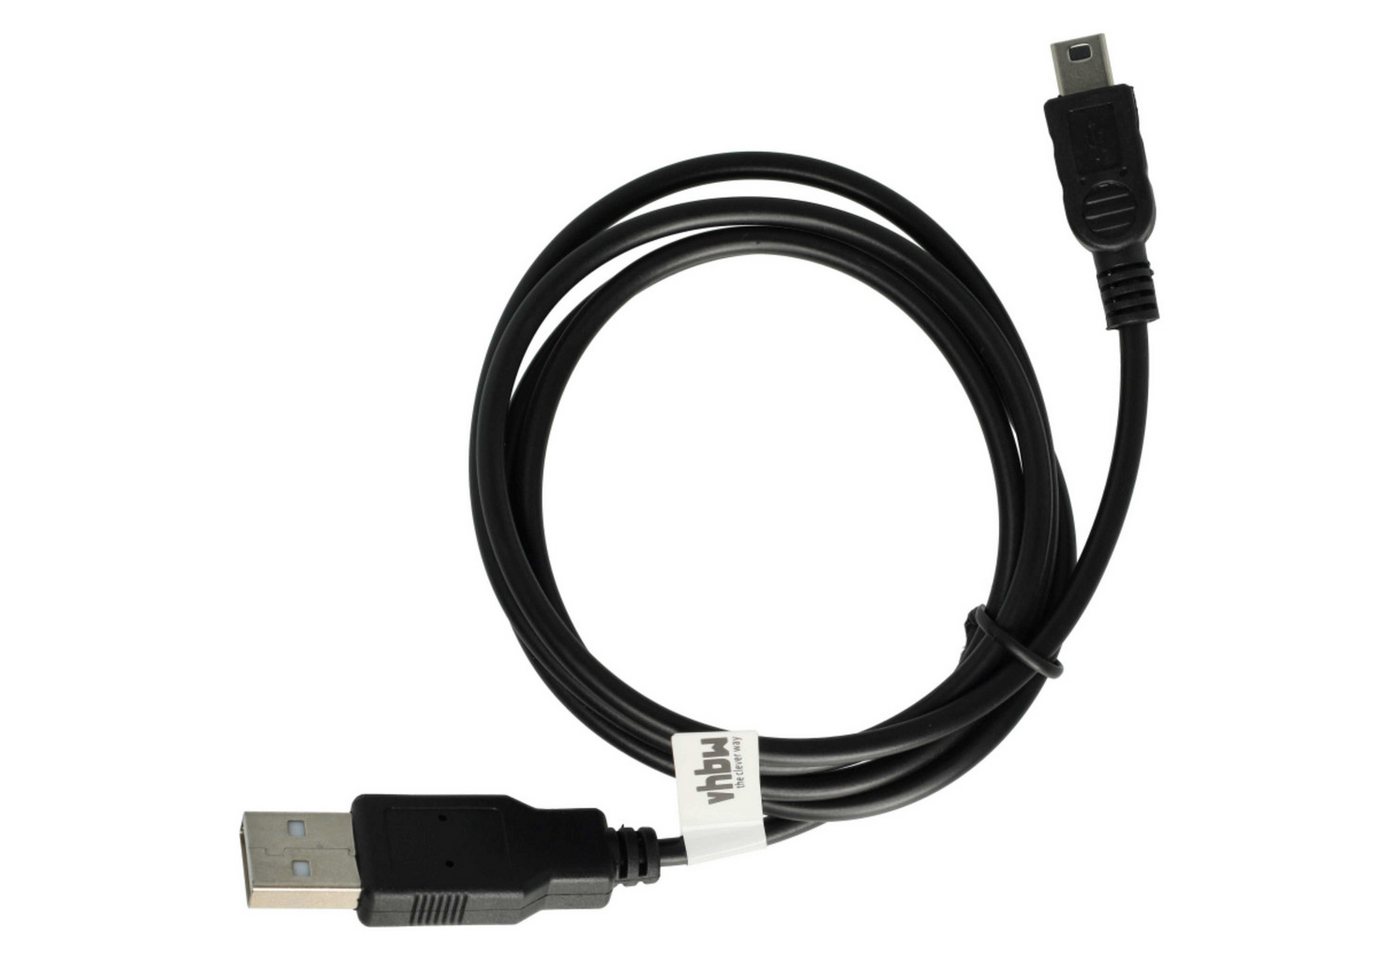 vhbw passend für Sony Digital8 R-TRV730, TRV18E Kamera / Mobilfunk / Foto USB-Kabel von vhbw